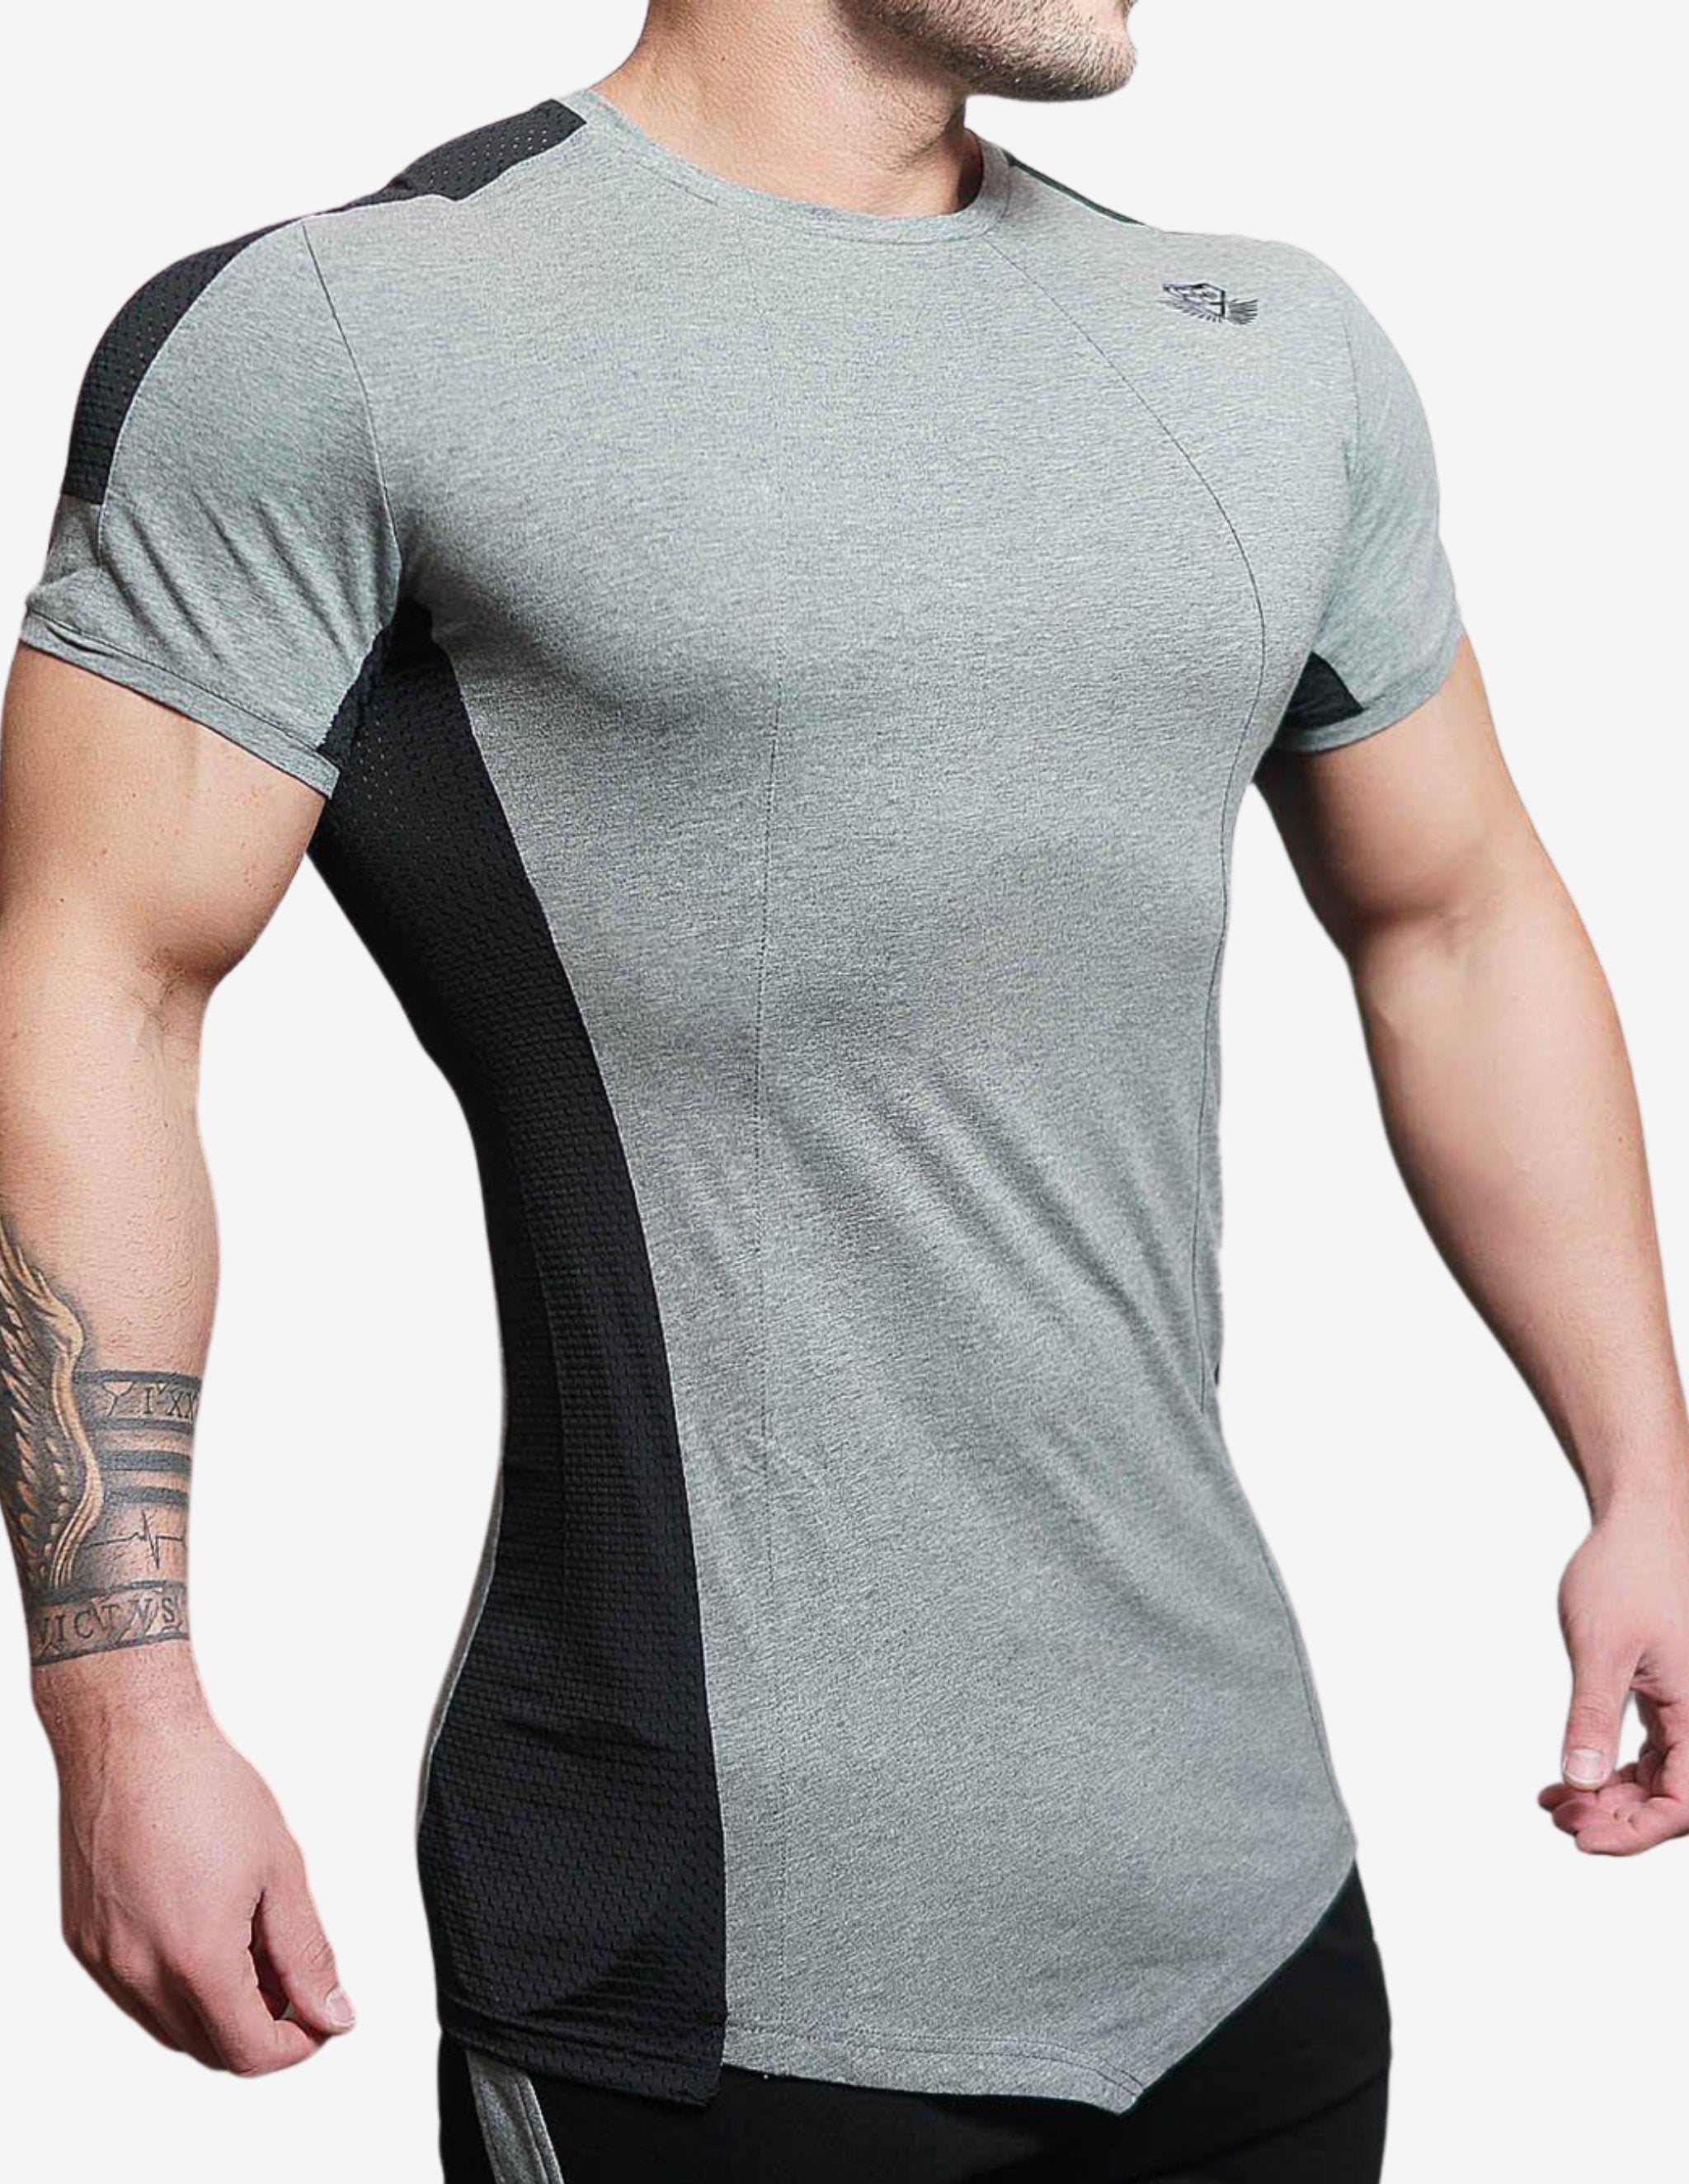 KANA Performance – Shirt Anthra Black-T-shirt Man-Body Engineers-Guru Muscle